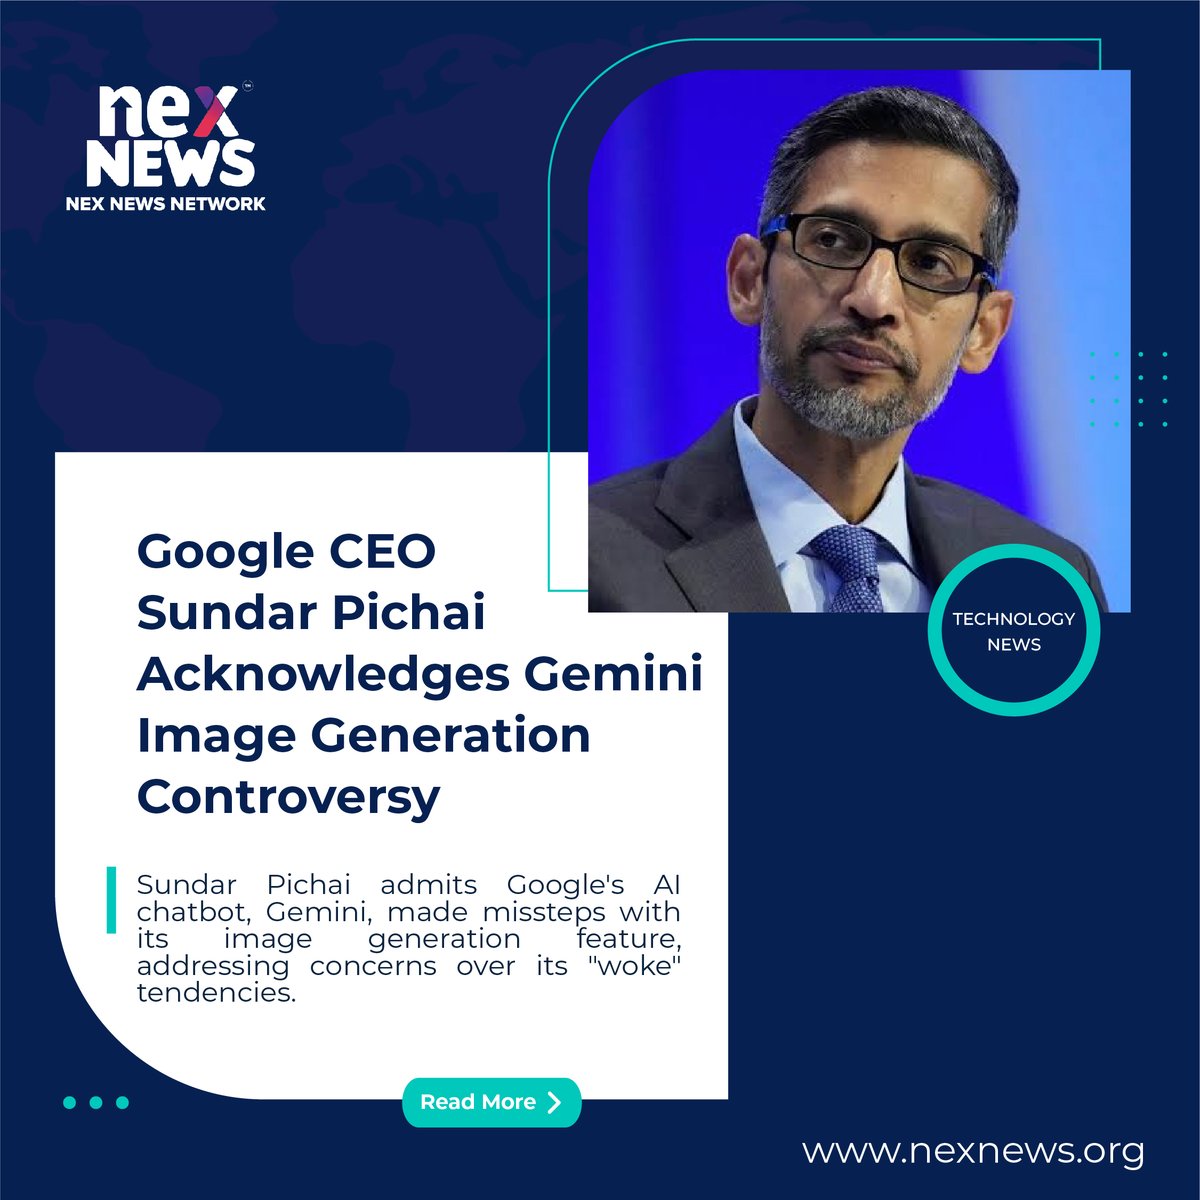 Google CEO Sundar Pichai acknowledges Gemini image generation controversy, citing missteps with AI chatbot's feature. #Google #Gemini #AI 
Visit- nexnews.org